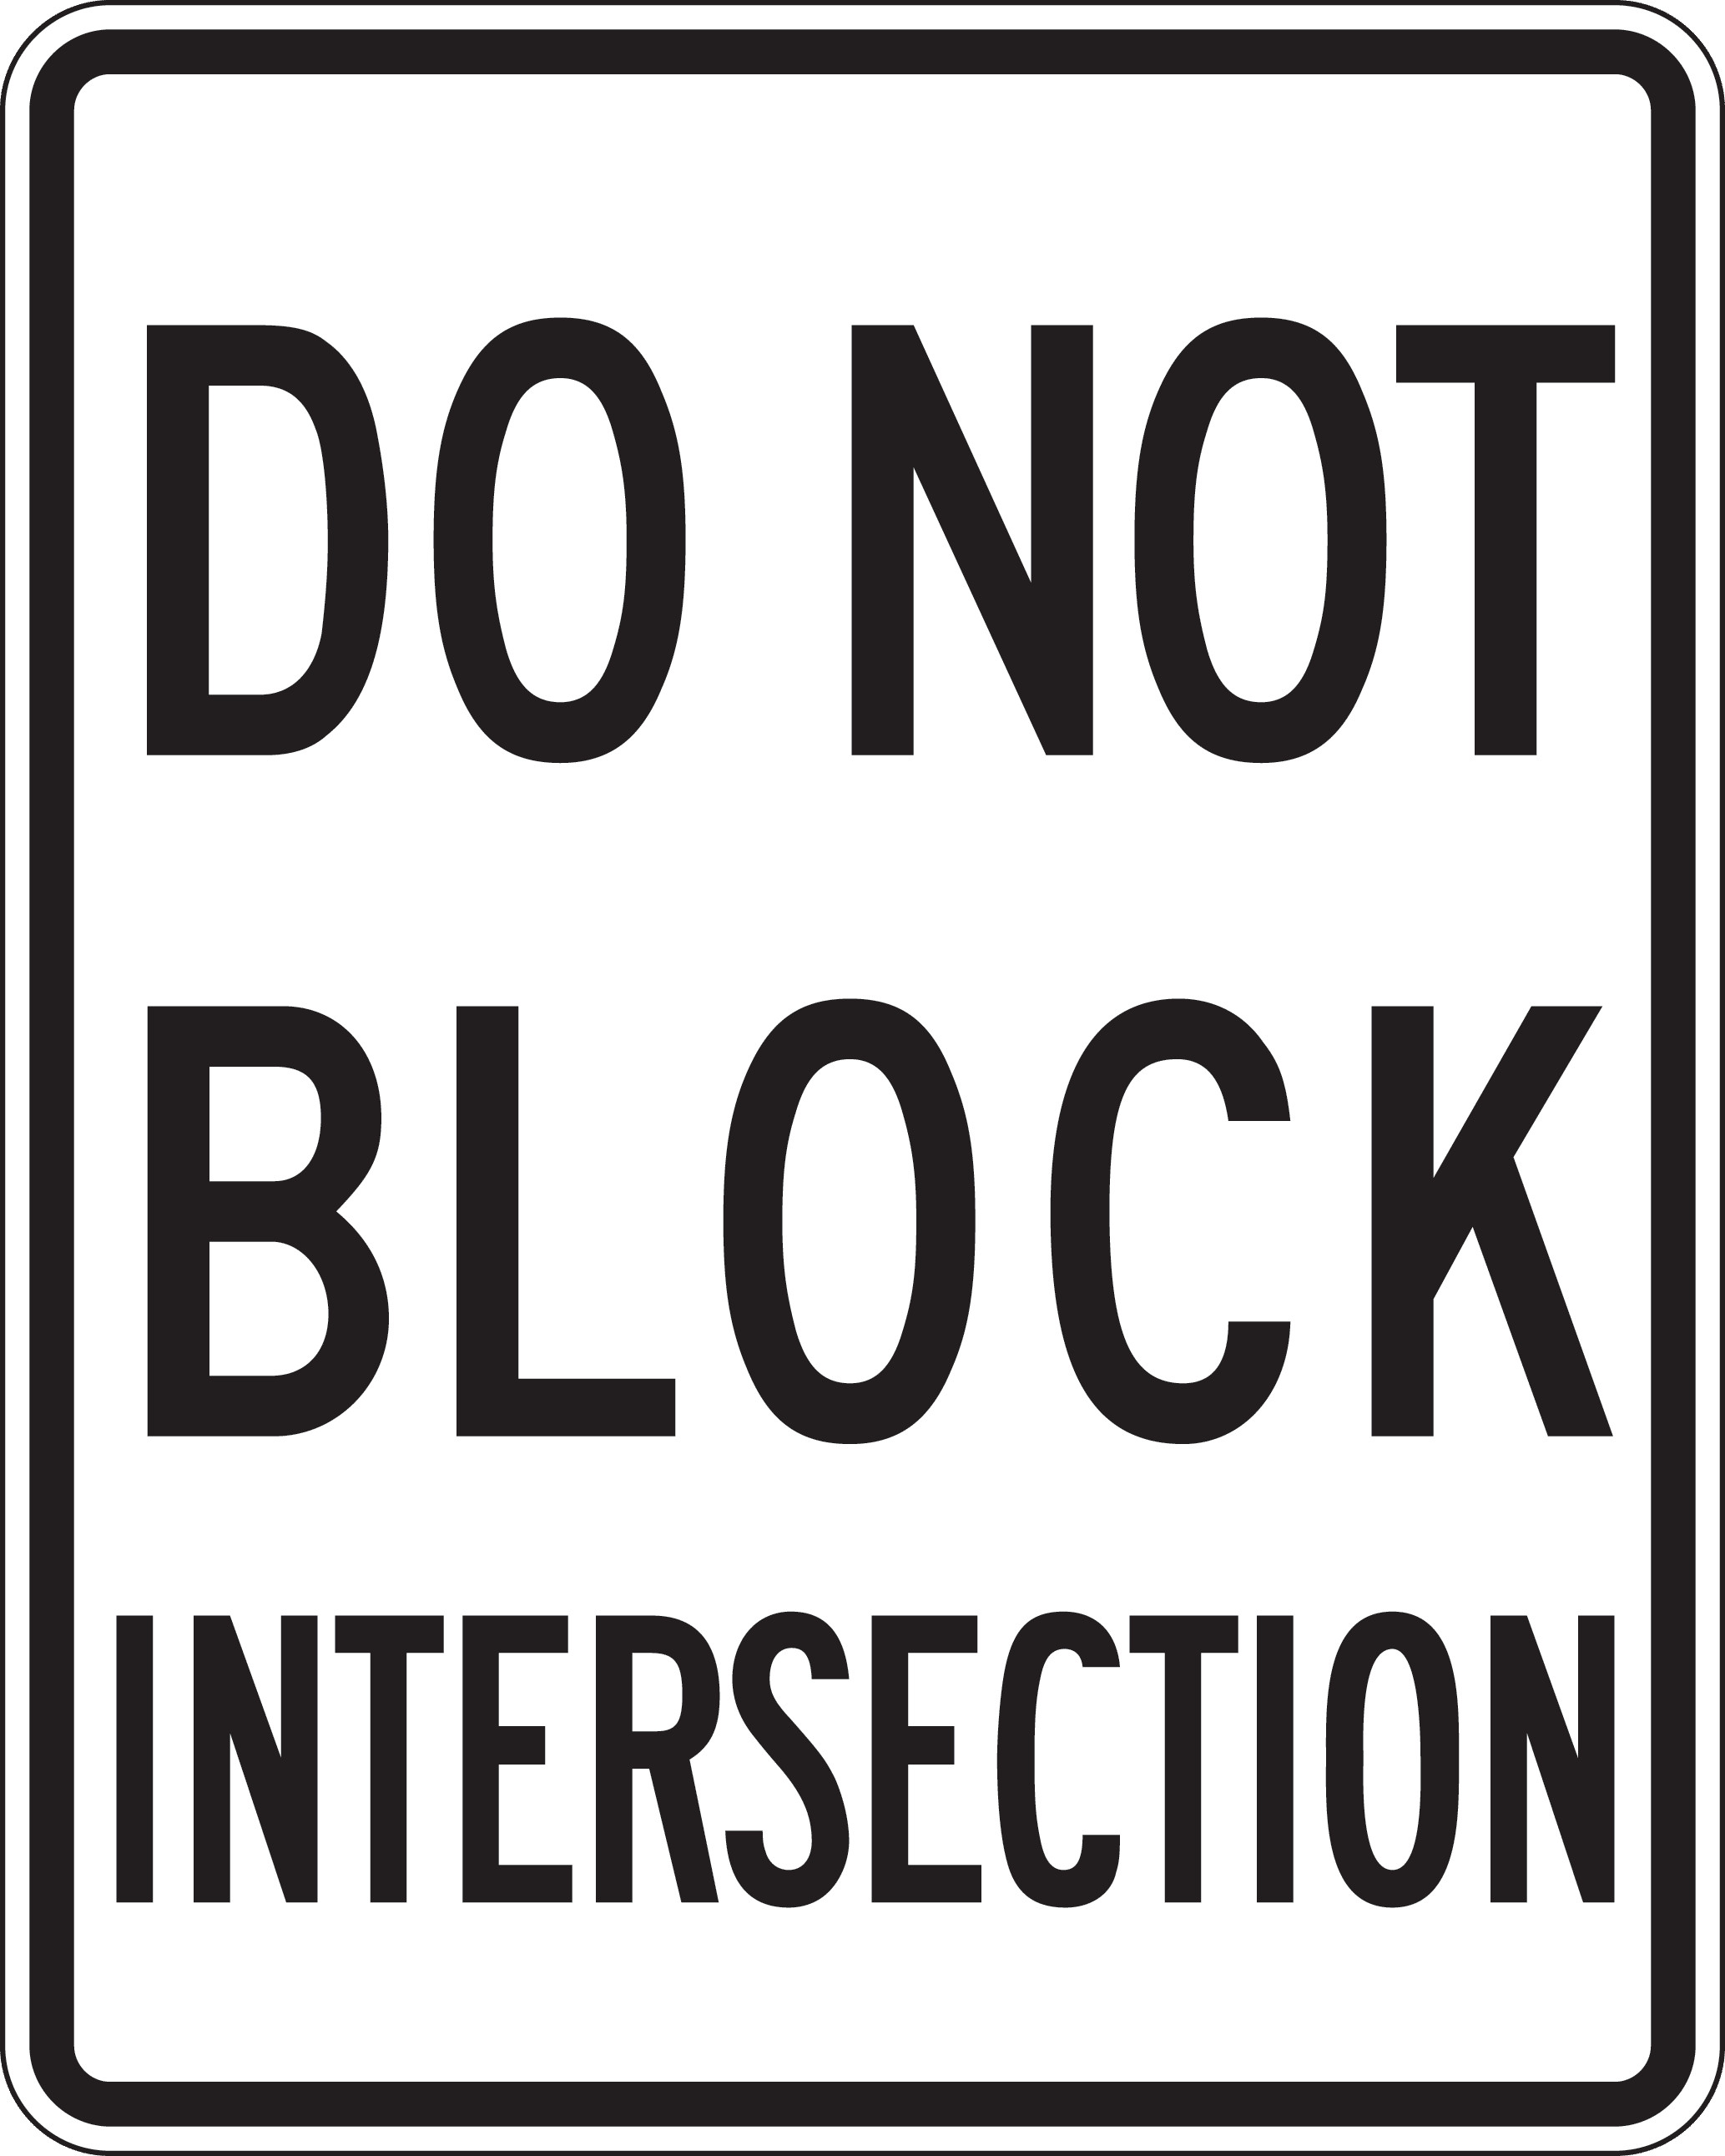 panneau usa intersection